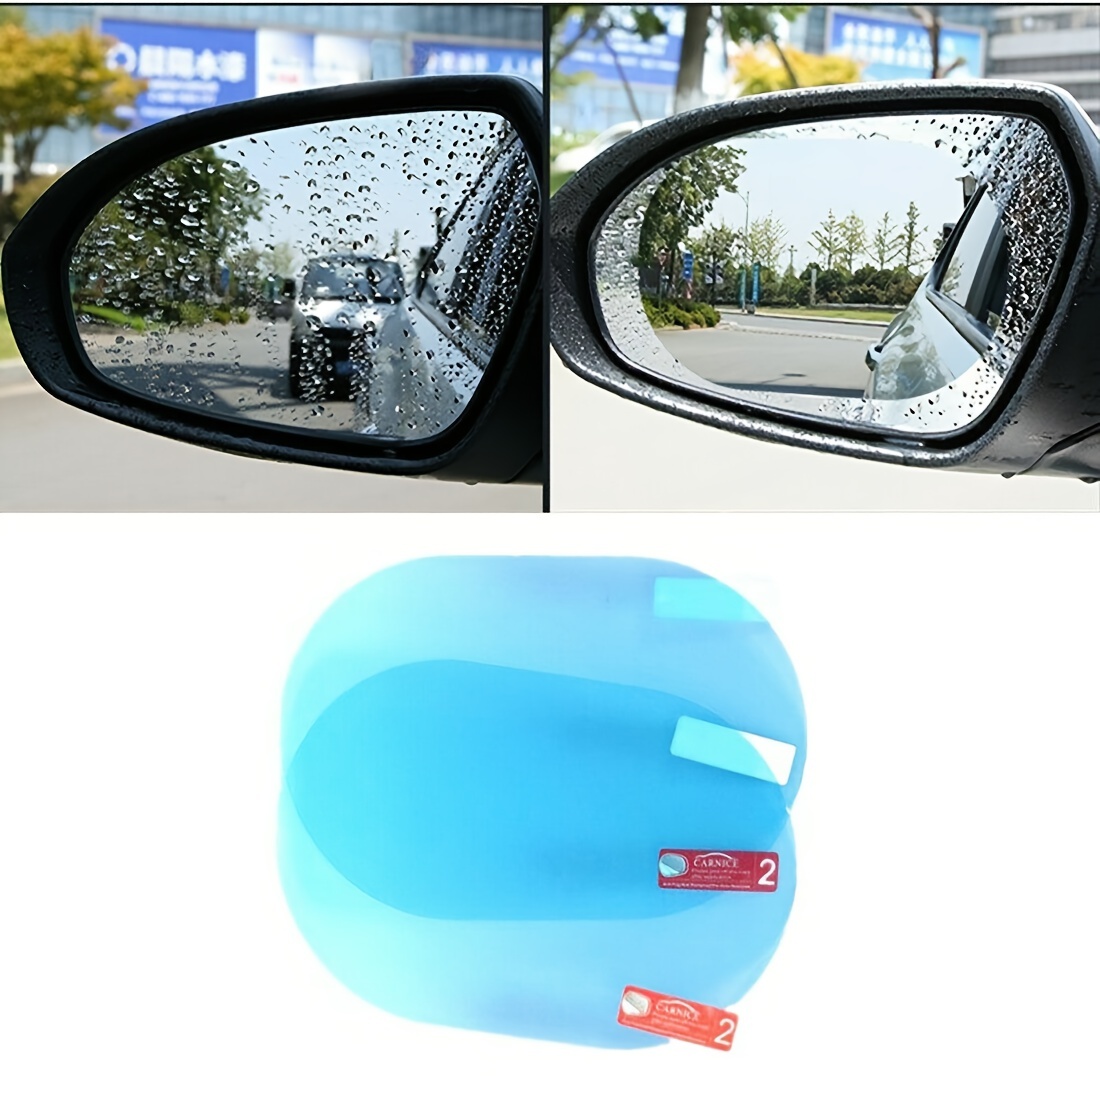 Rückspiegel Regenfolie 10 Stk/Set Für Auto Regenschutz Regenschutzfolie